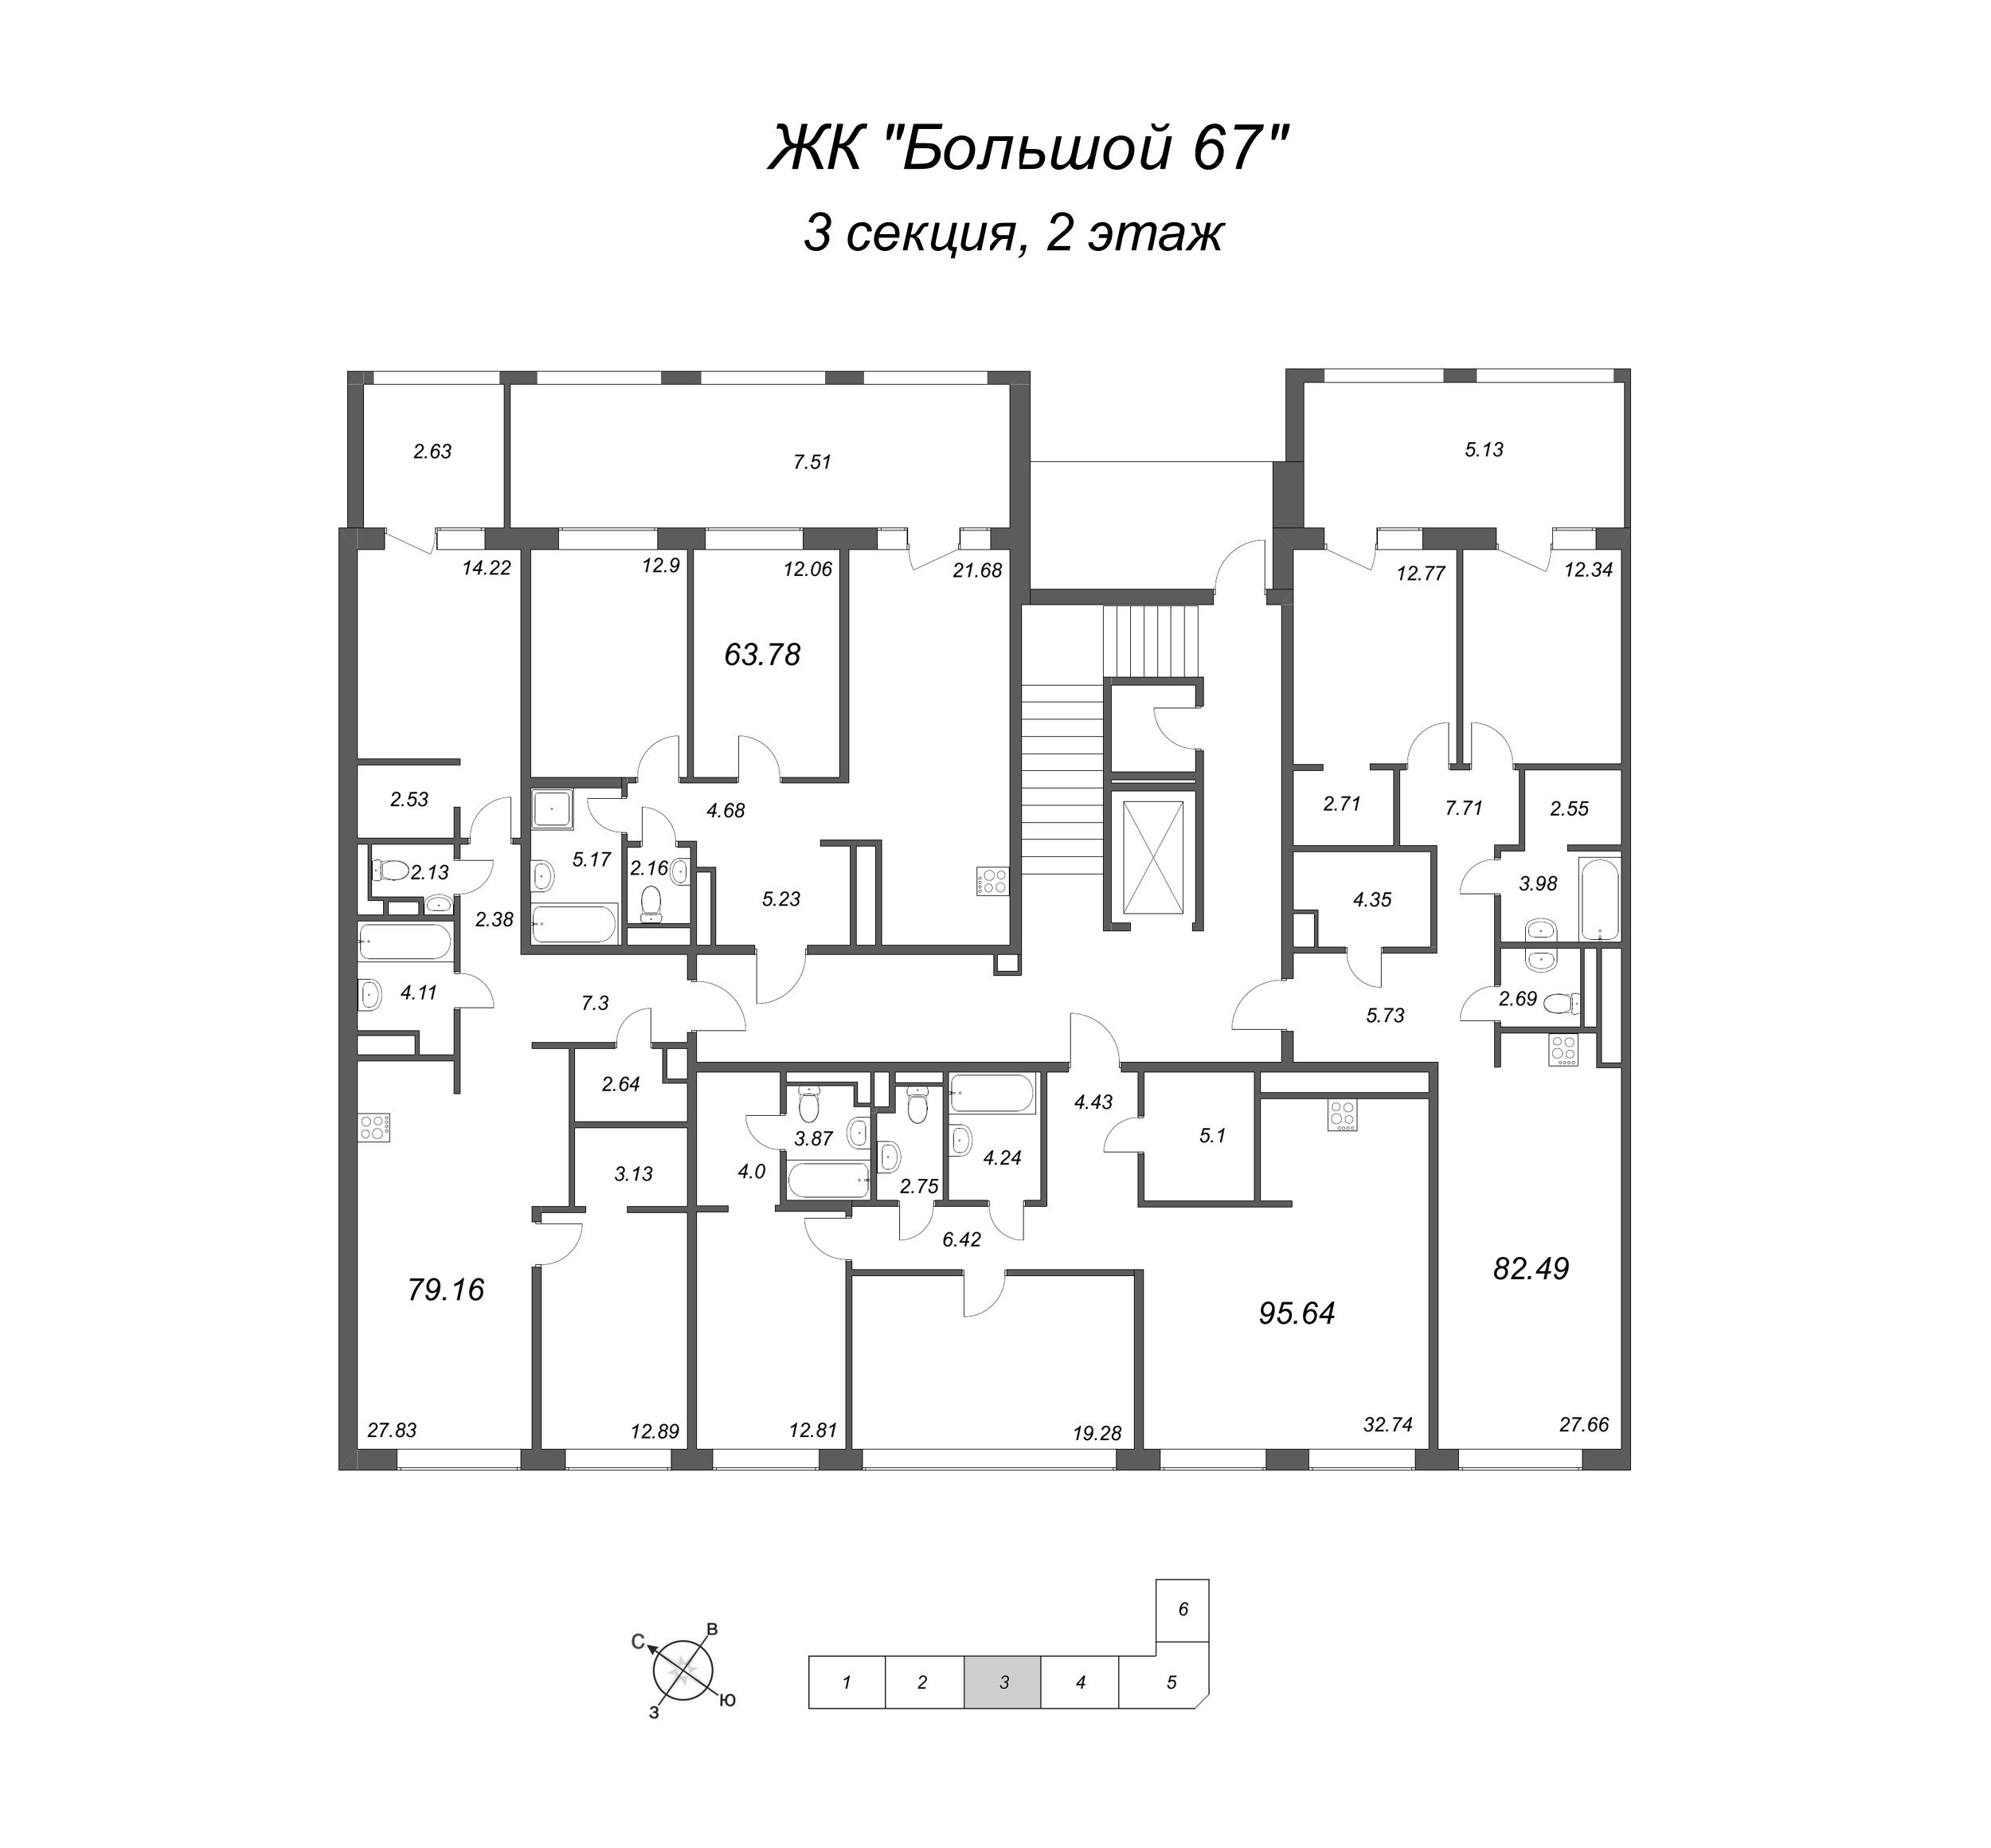 3-комнатная (Евро) квартира, 95.64 м² - планировка этажа